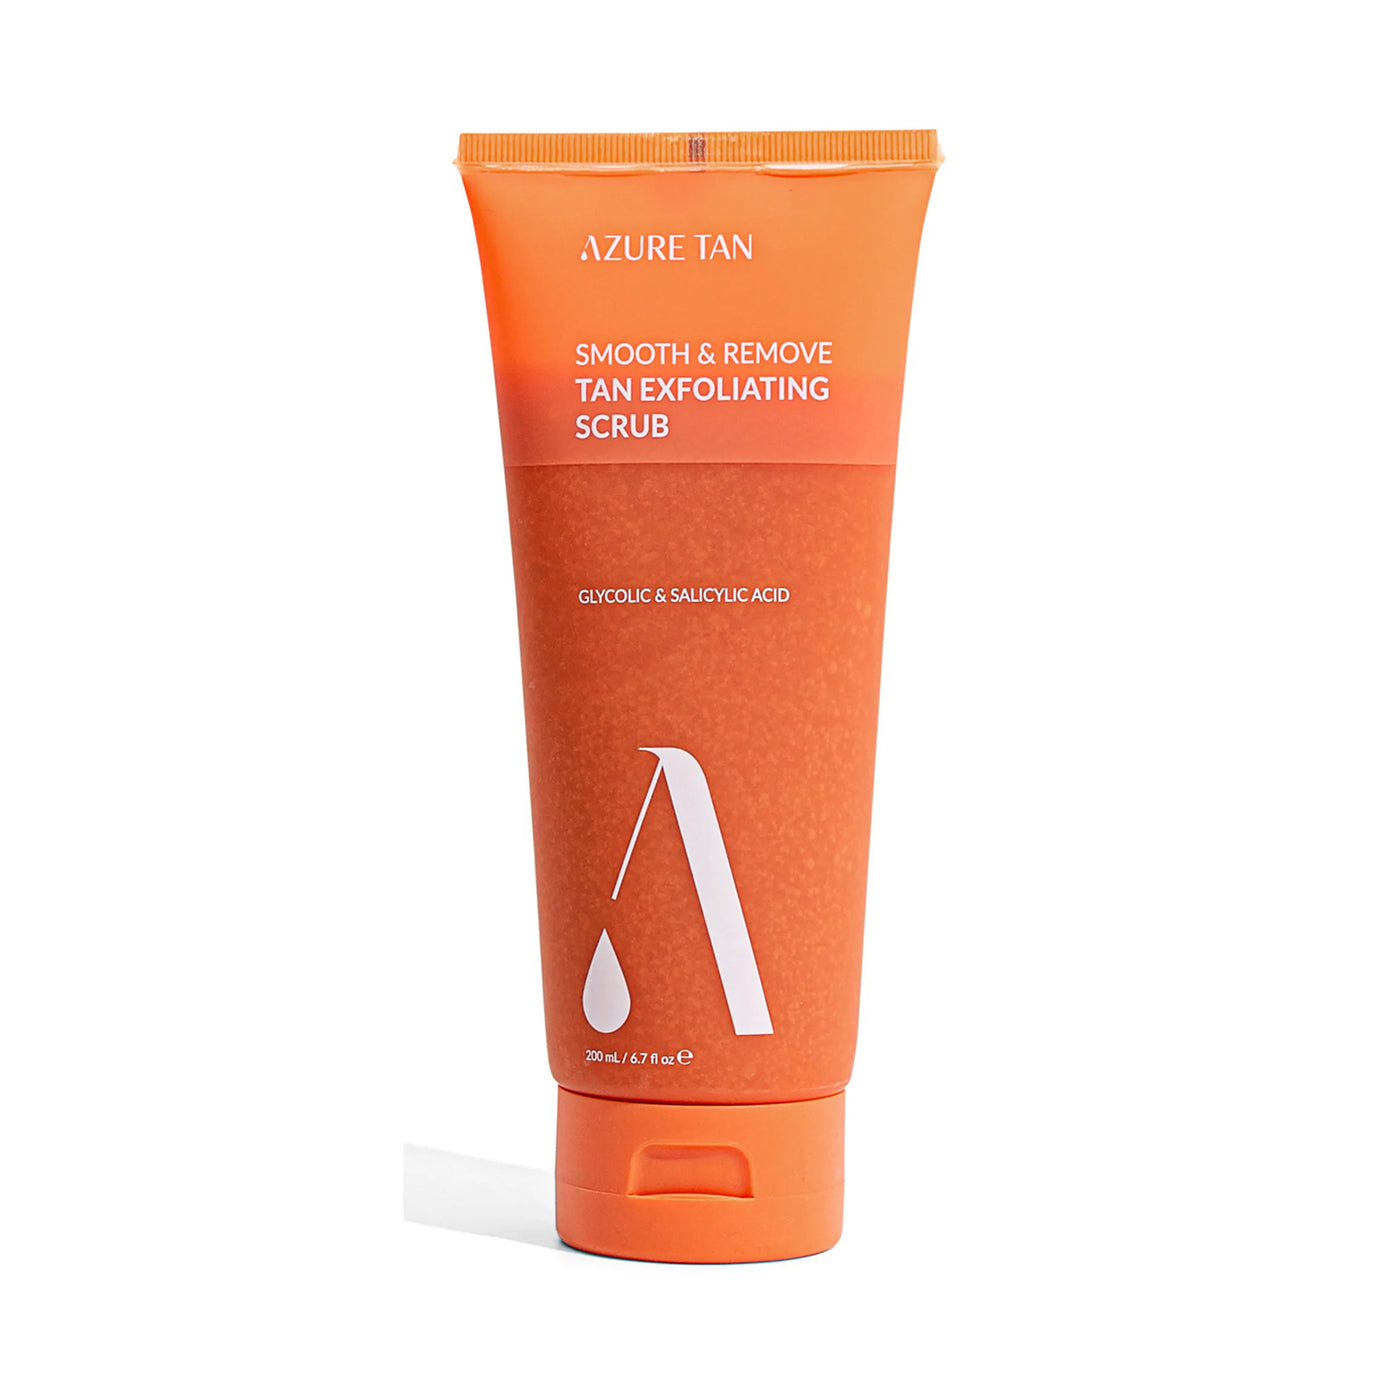 Azure Tan Smooth & Remove Tan Exfoliating Scrub (200ml)